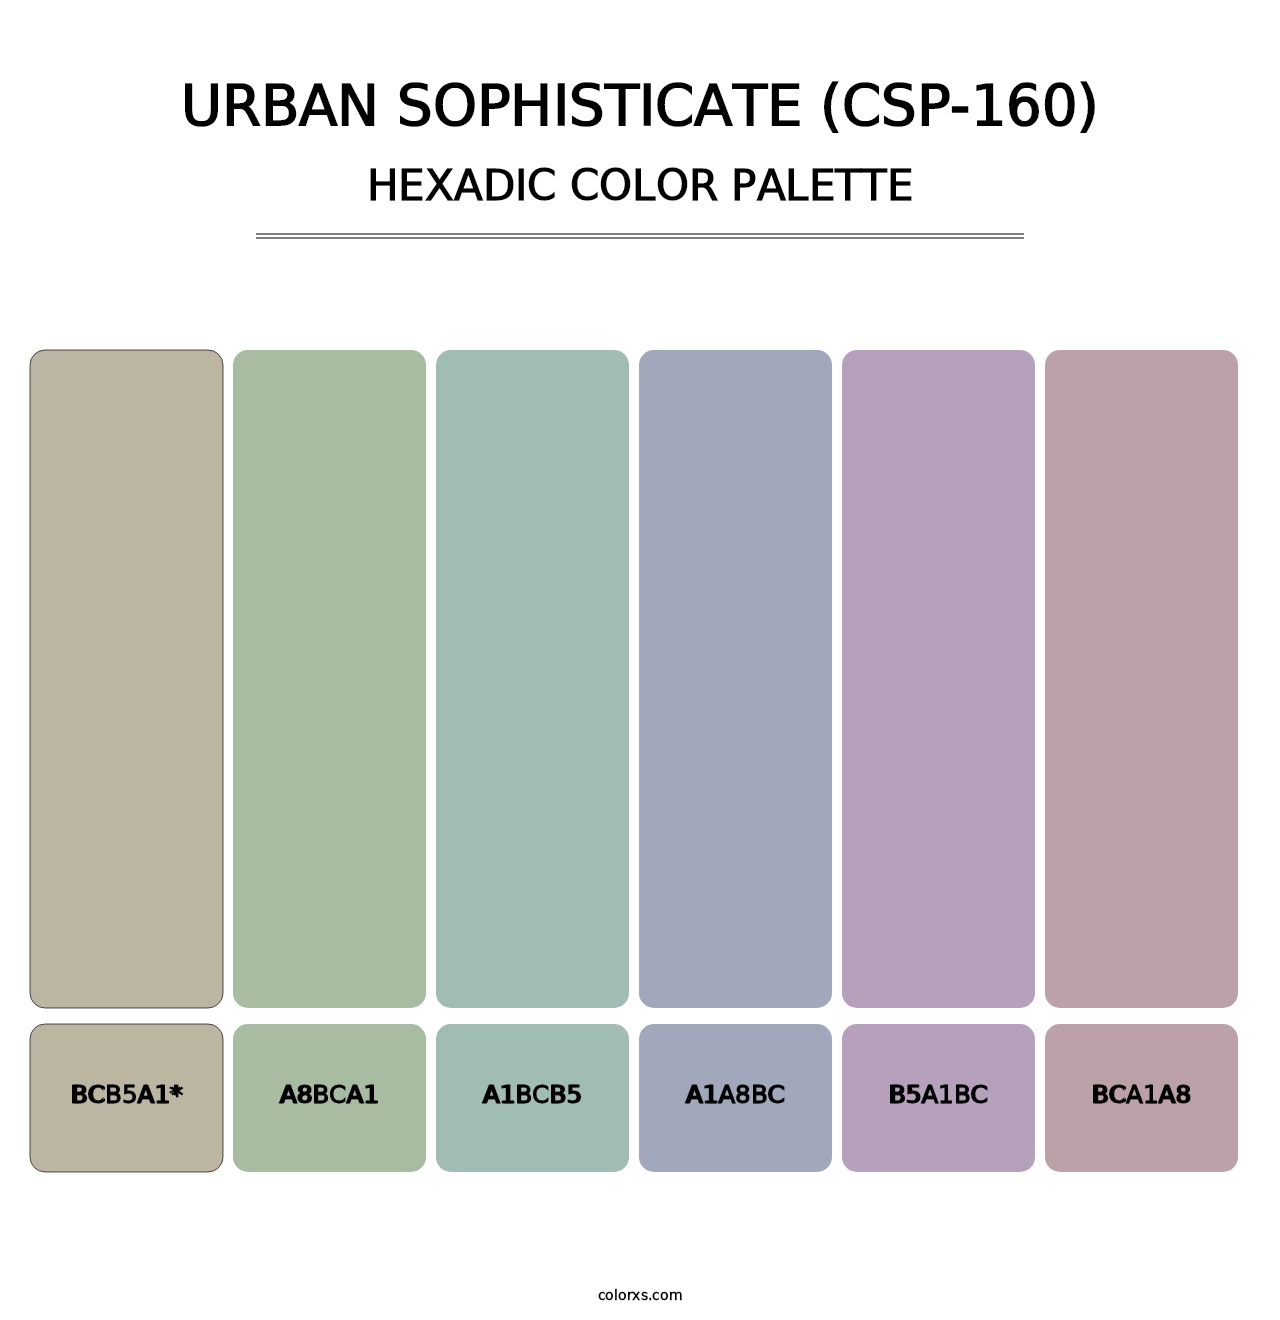 Urban Sophisticate (CSP-160) - Hexadic Color Palette